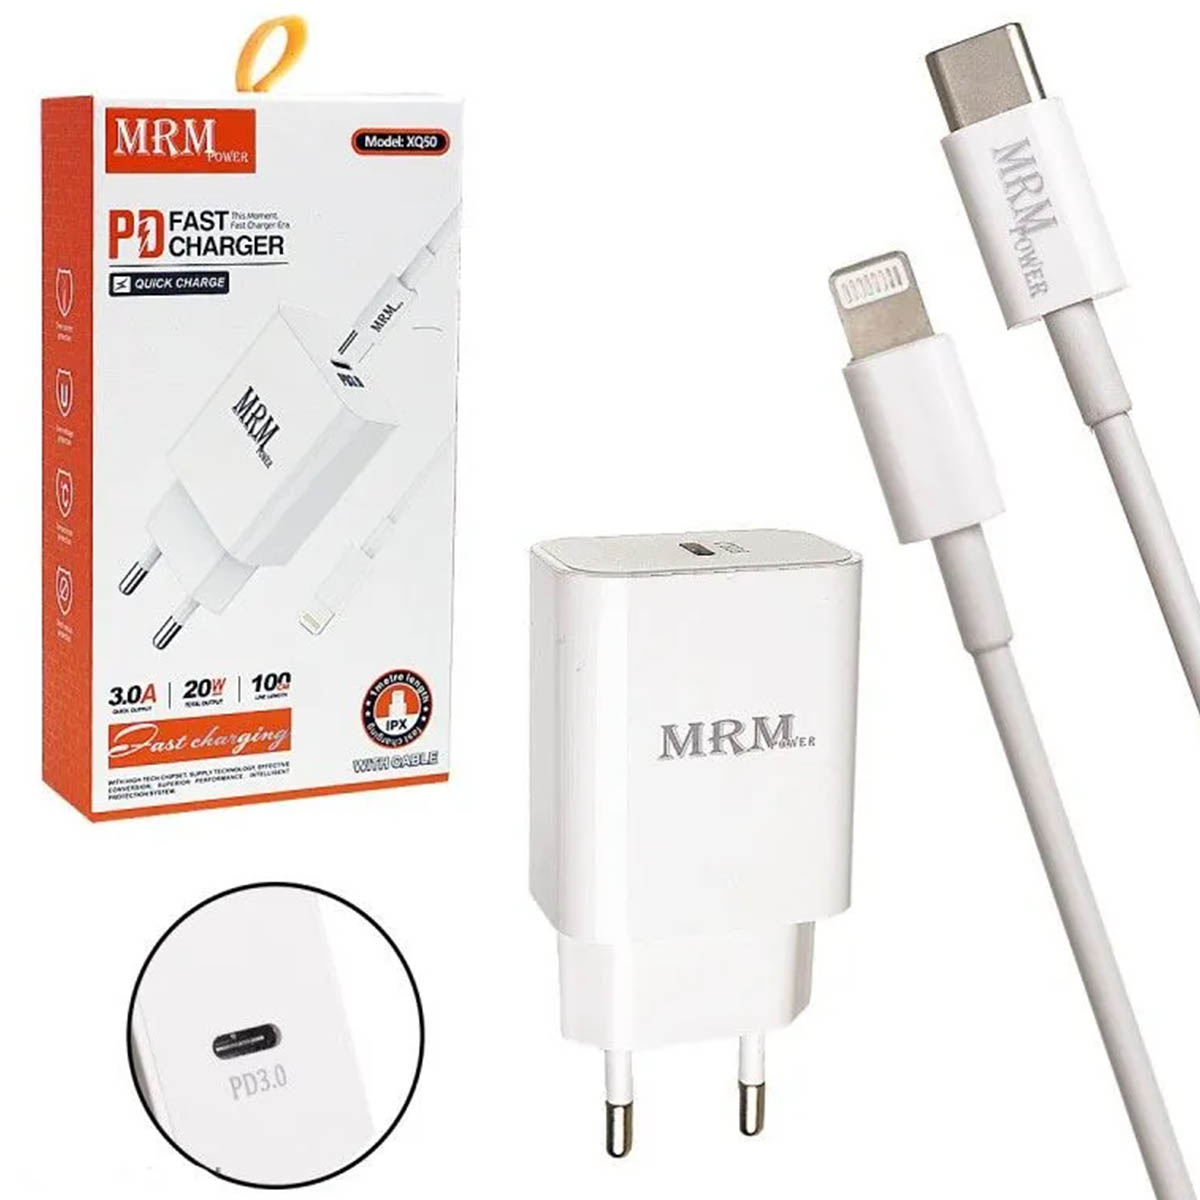 СЗУ (Сетевое зарядное устройство) MRM XQ50 с кабелем USB Type C на Lightning 8 pin, 20W, 1 USB Type C, длина 1 метр, цвет белый